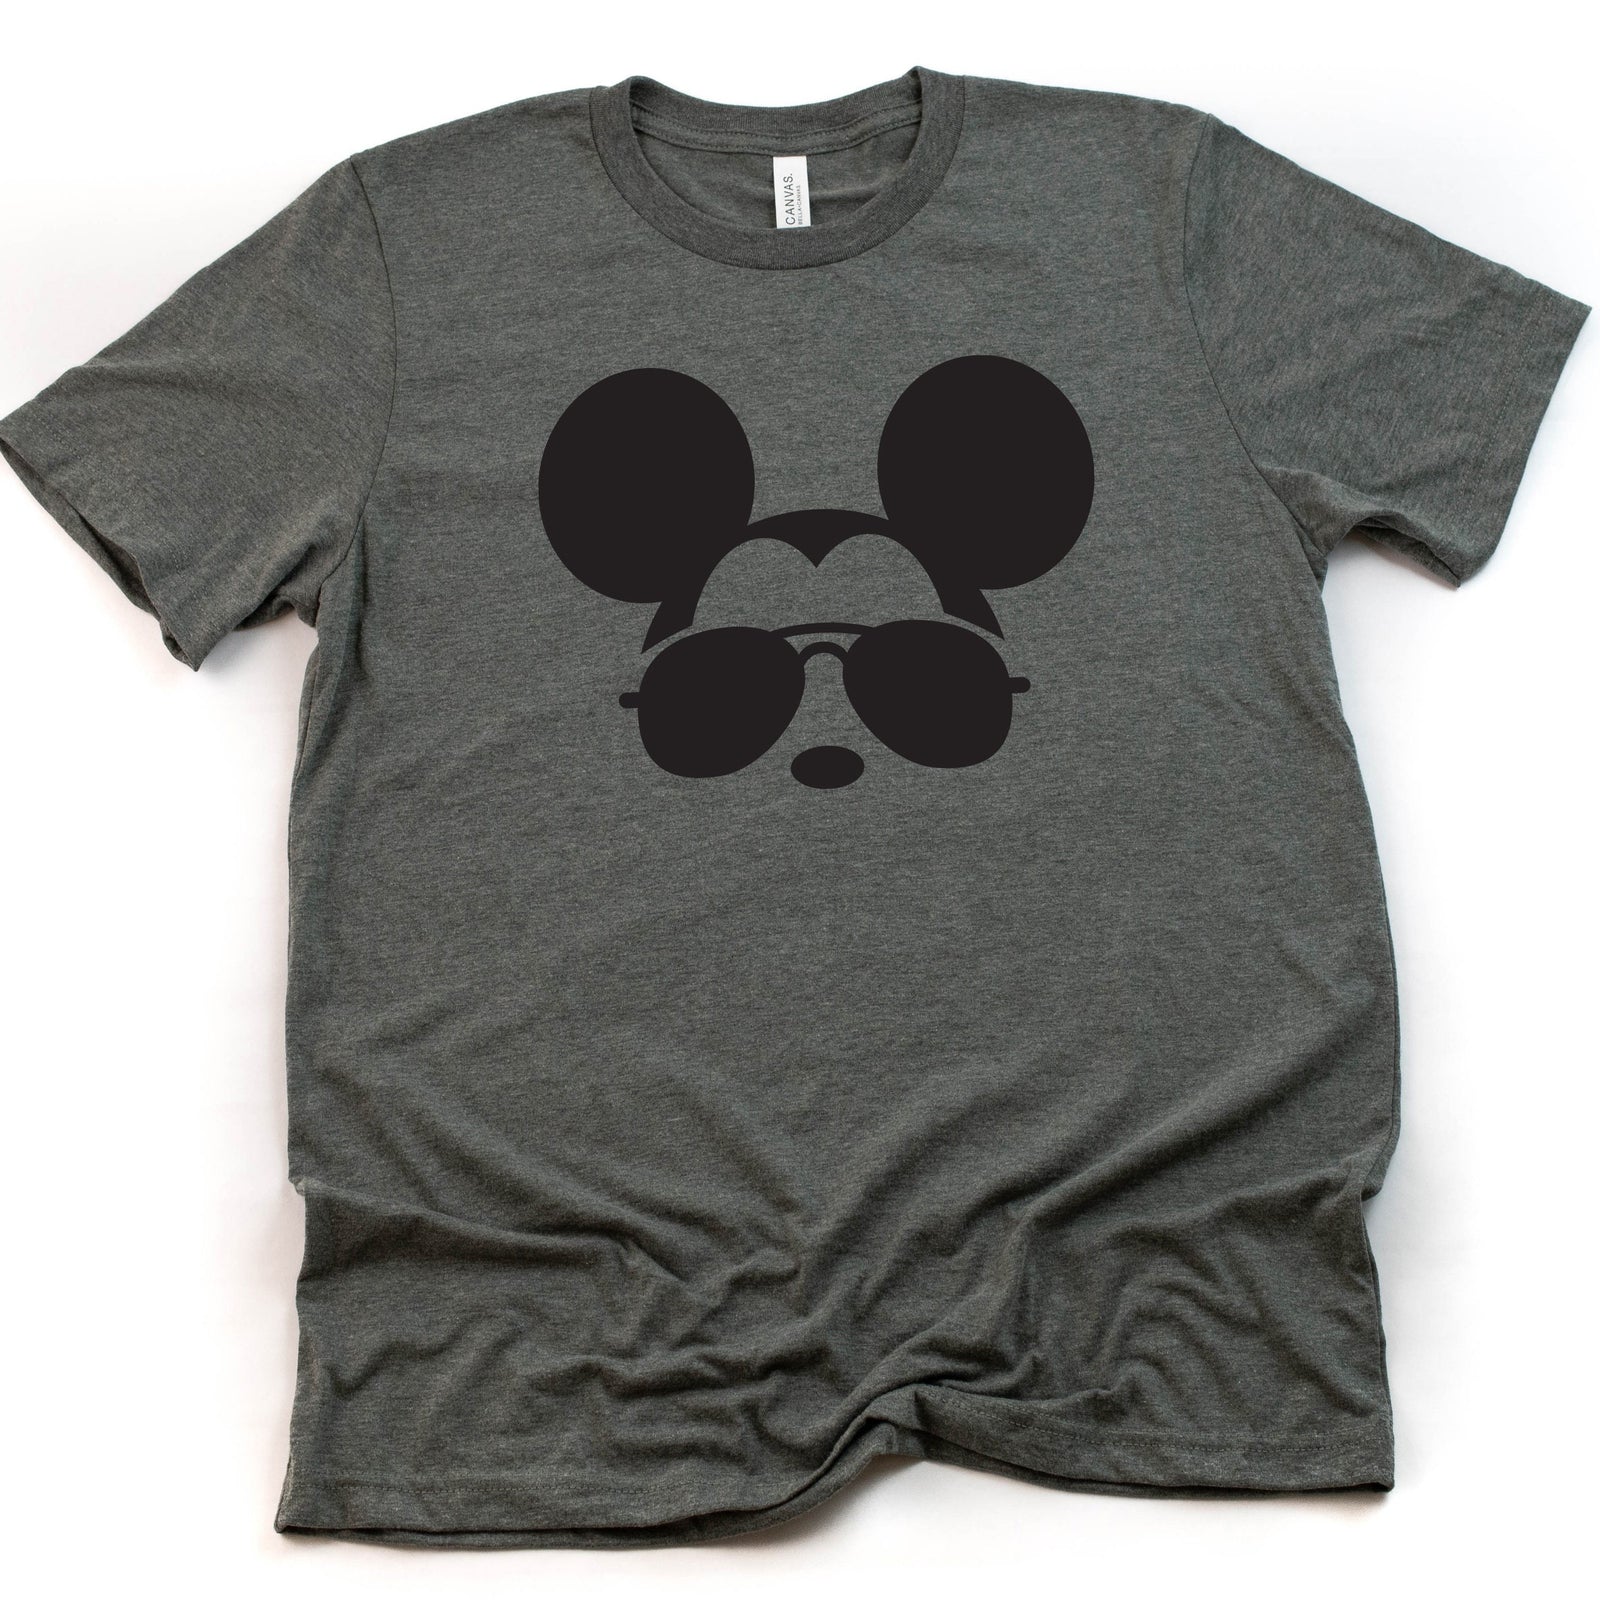 Custom Mickey t shirt - Disney Trip Matching Shirts - Mickey Mouse T Shirt - Mickey Sunglasses - Personalized Text